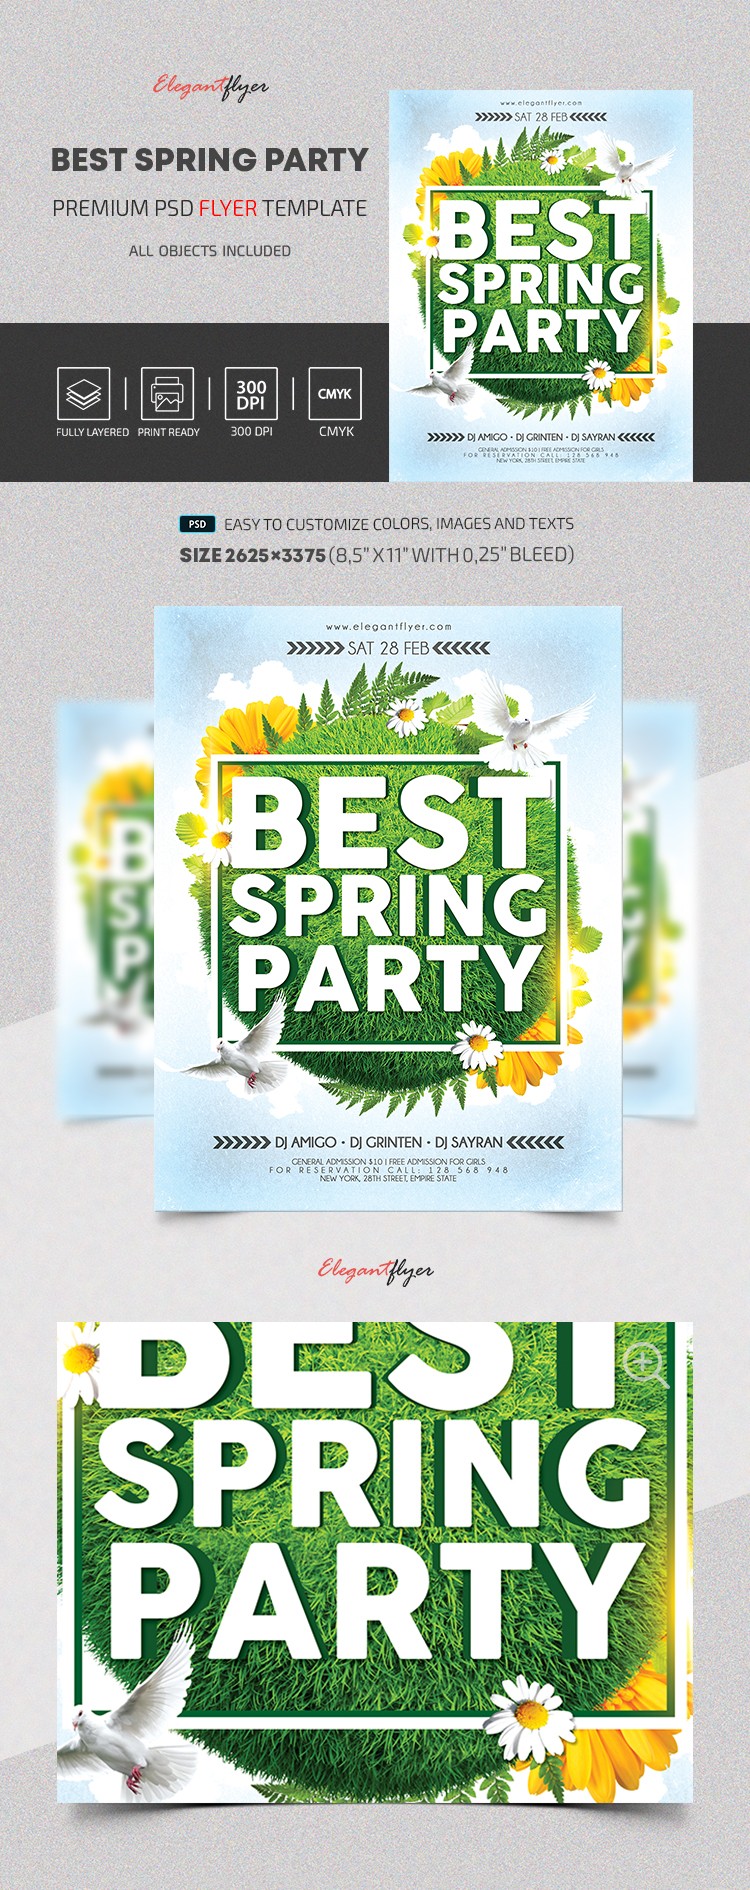 Best Spring Party by ElegantFlyer